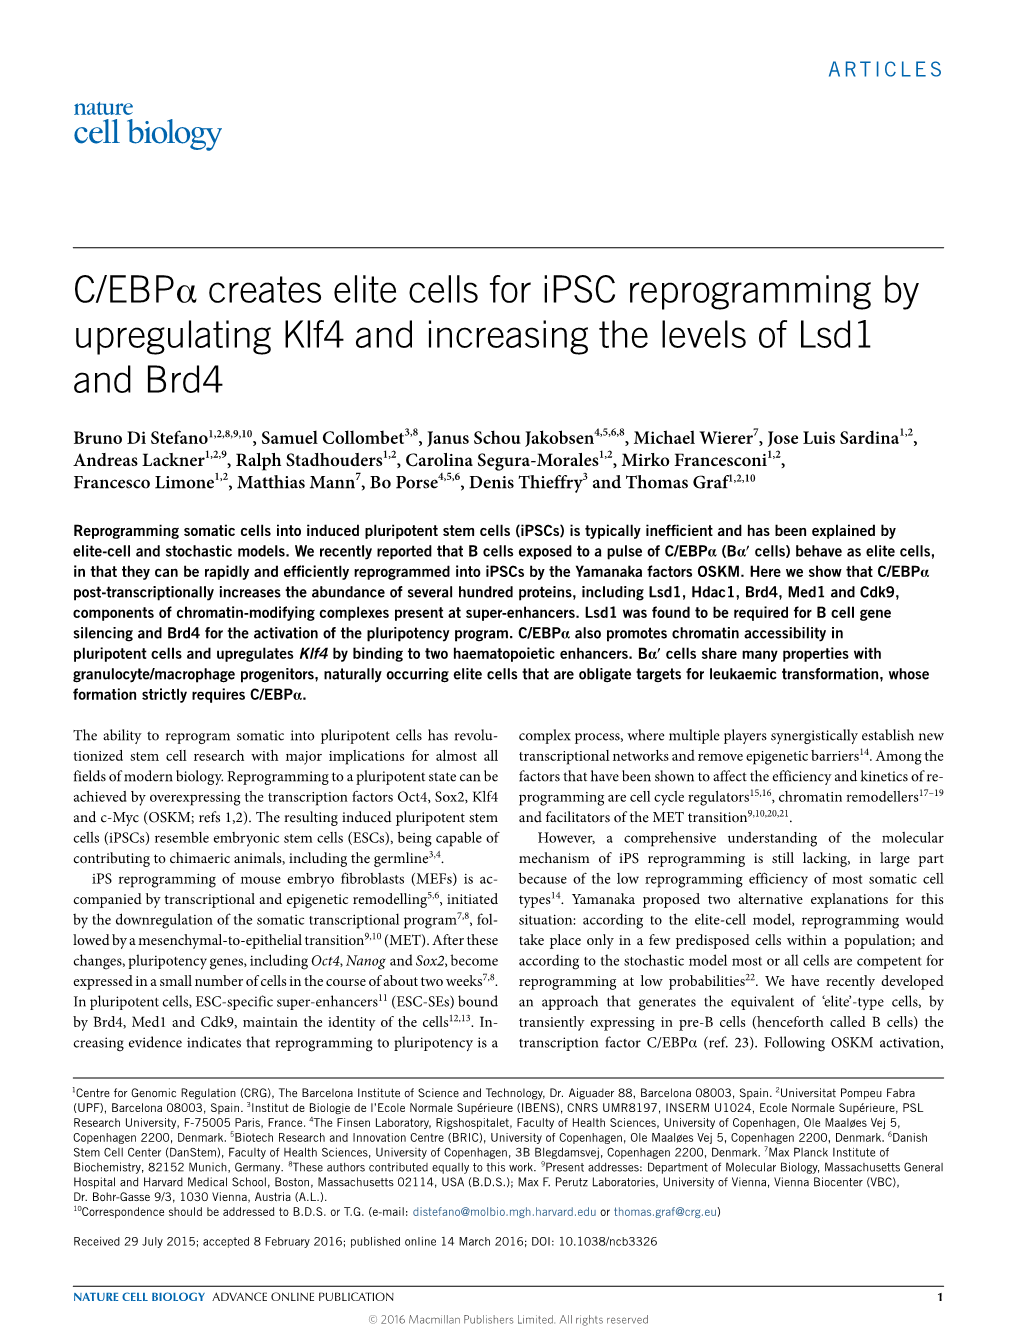 C/EBP Creates Elite Cells for Ipsc Reprogramming by Upregulating